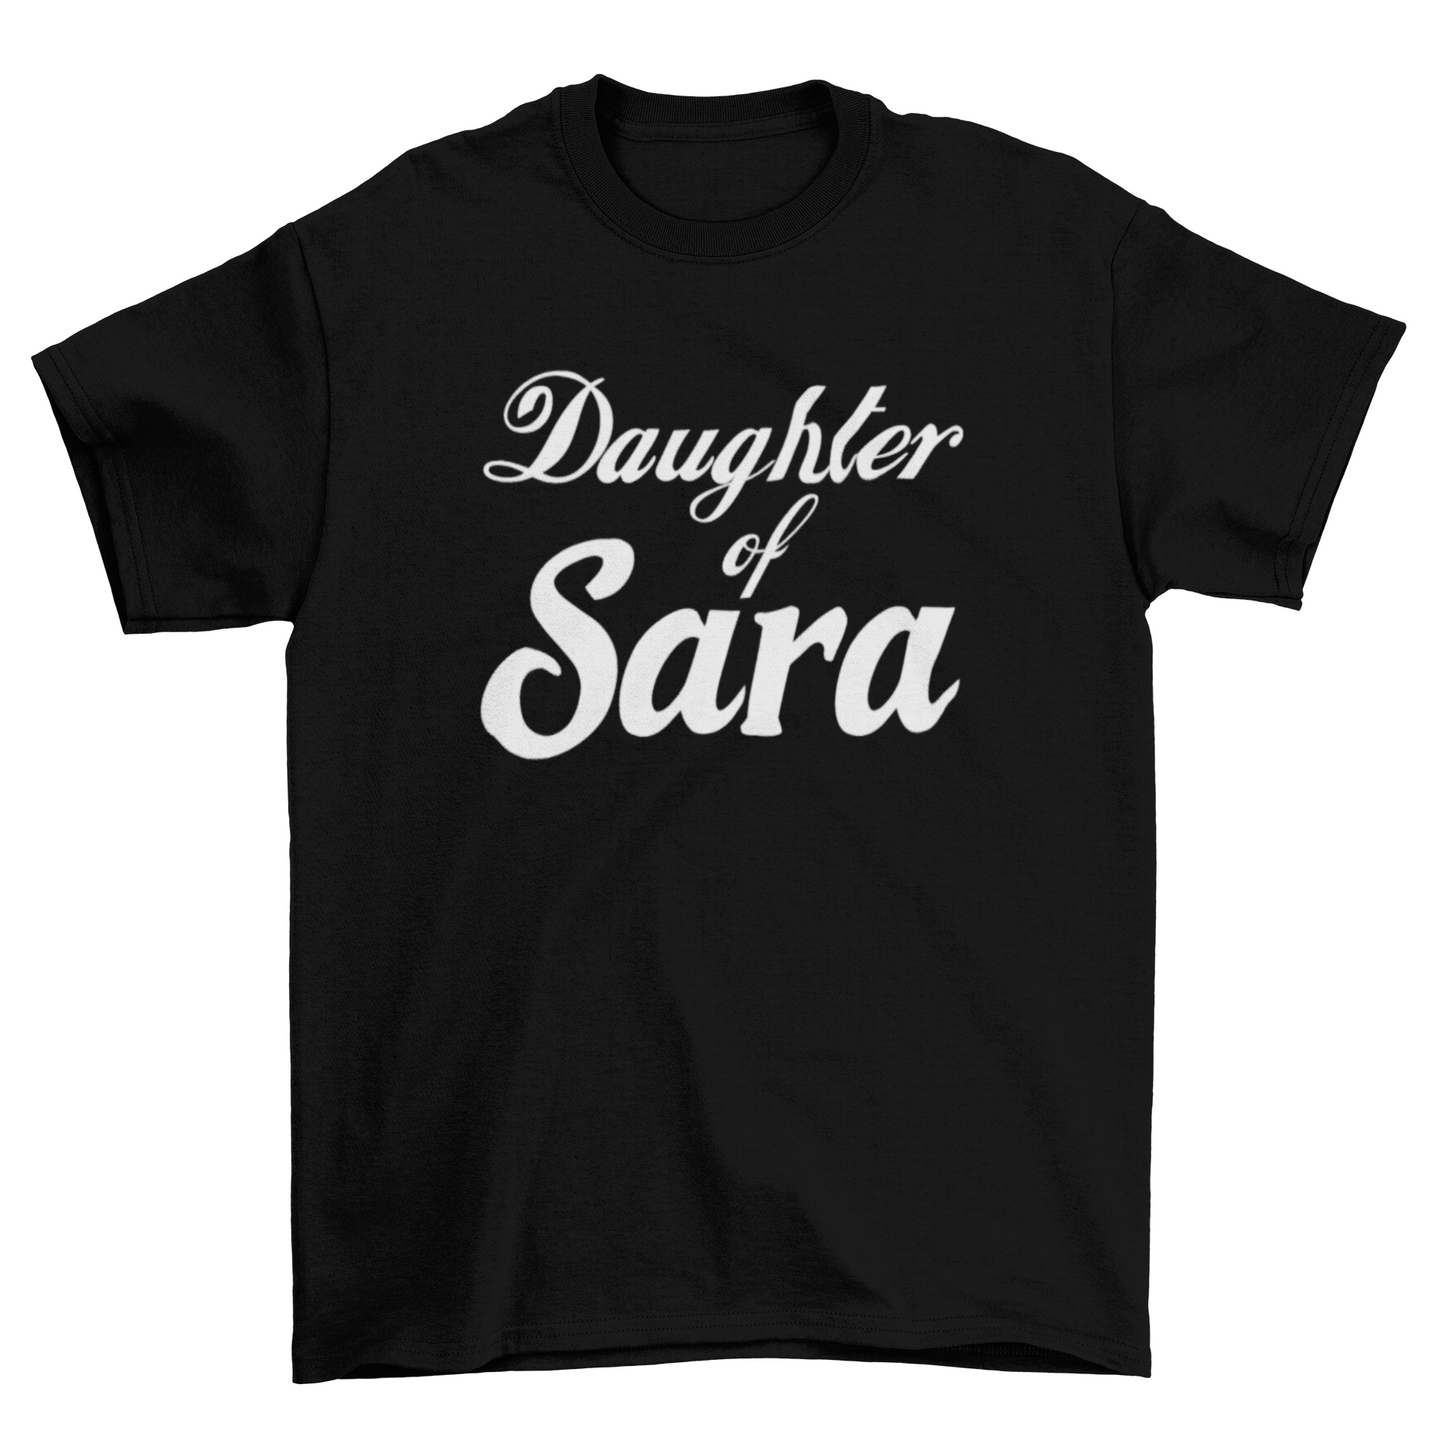 Daughter of sara